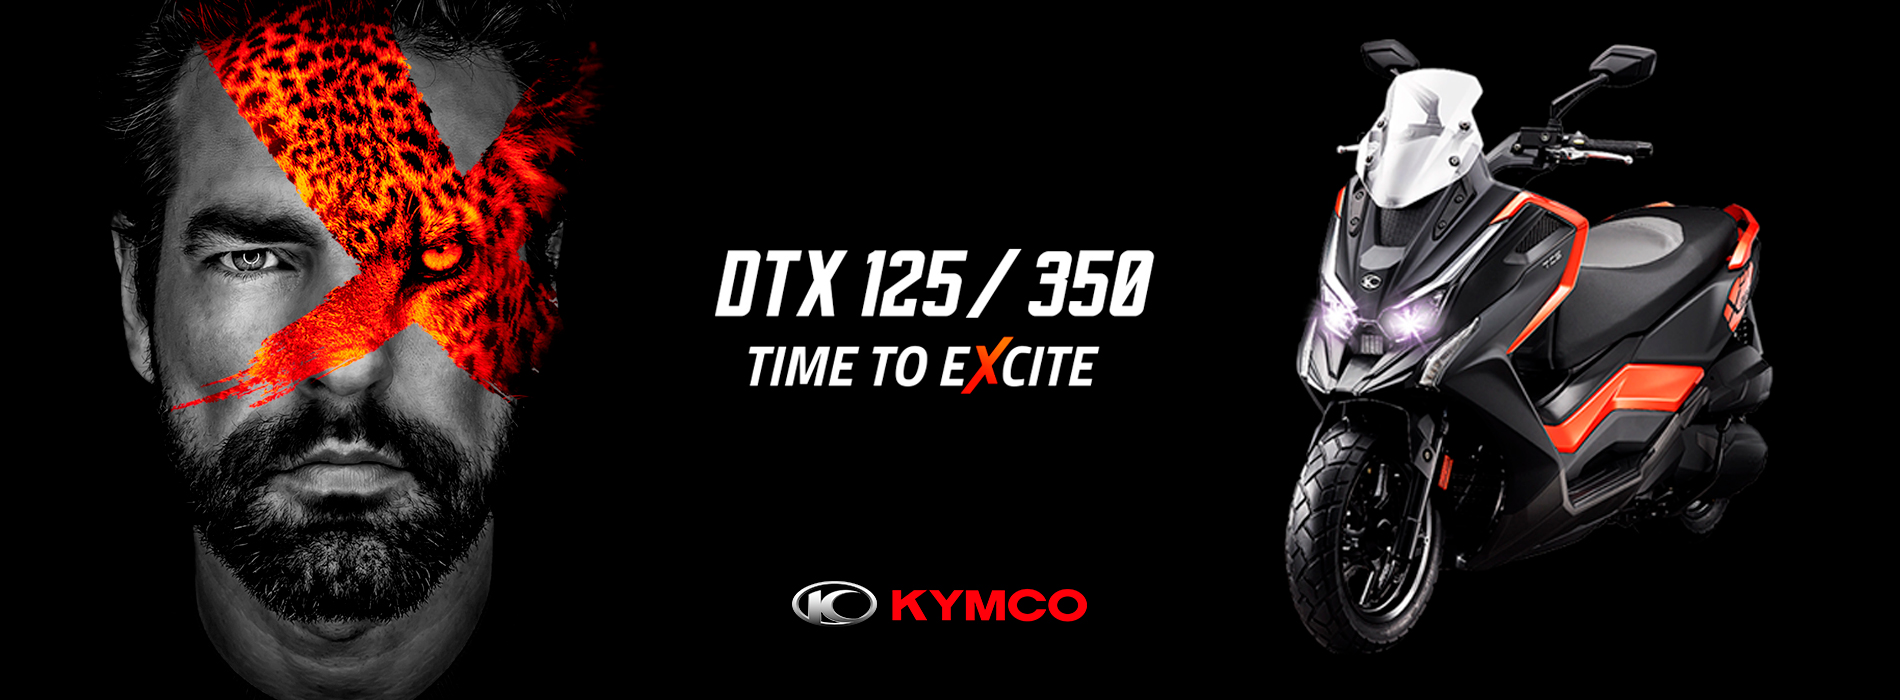 promocion kymco DTX 350 en murcia francisco belmonte